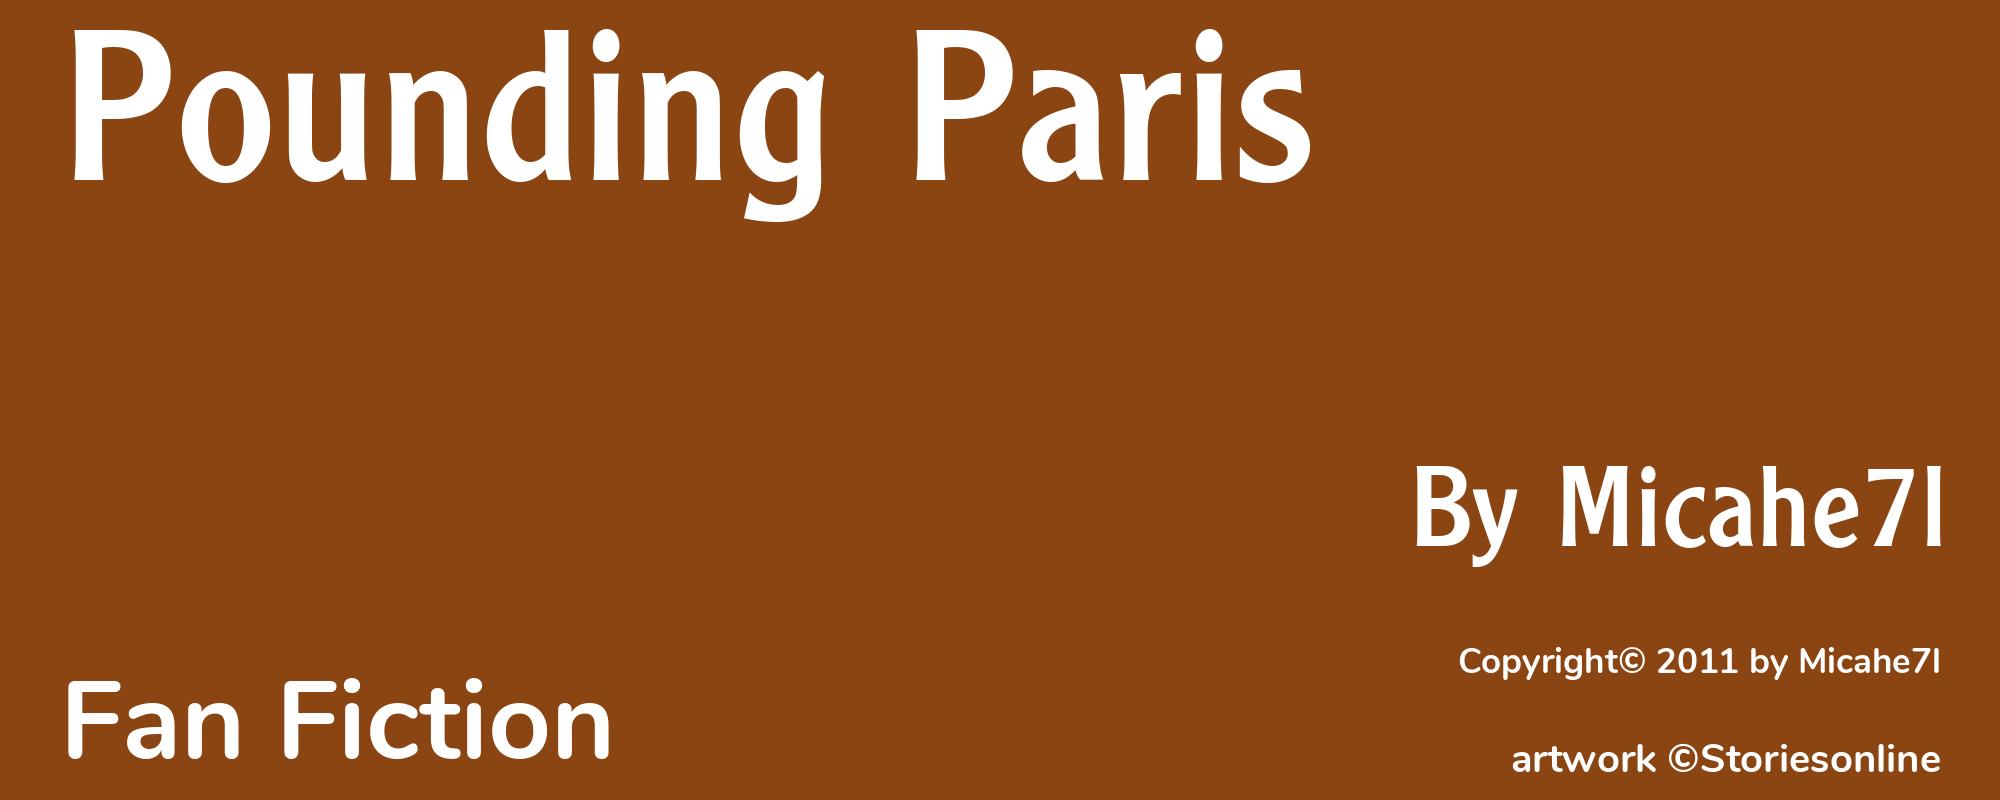 Pounding Paris - Cover